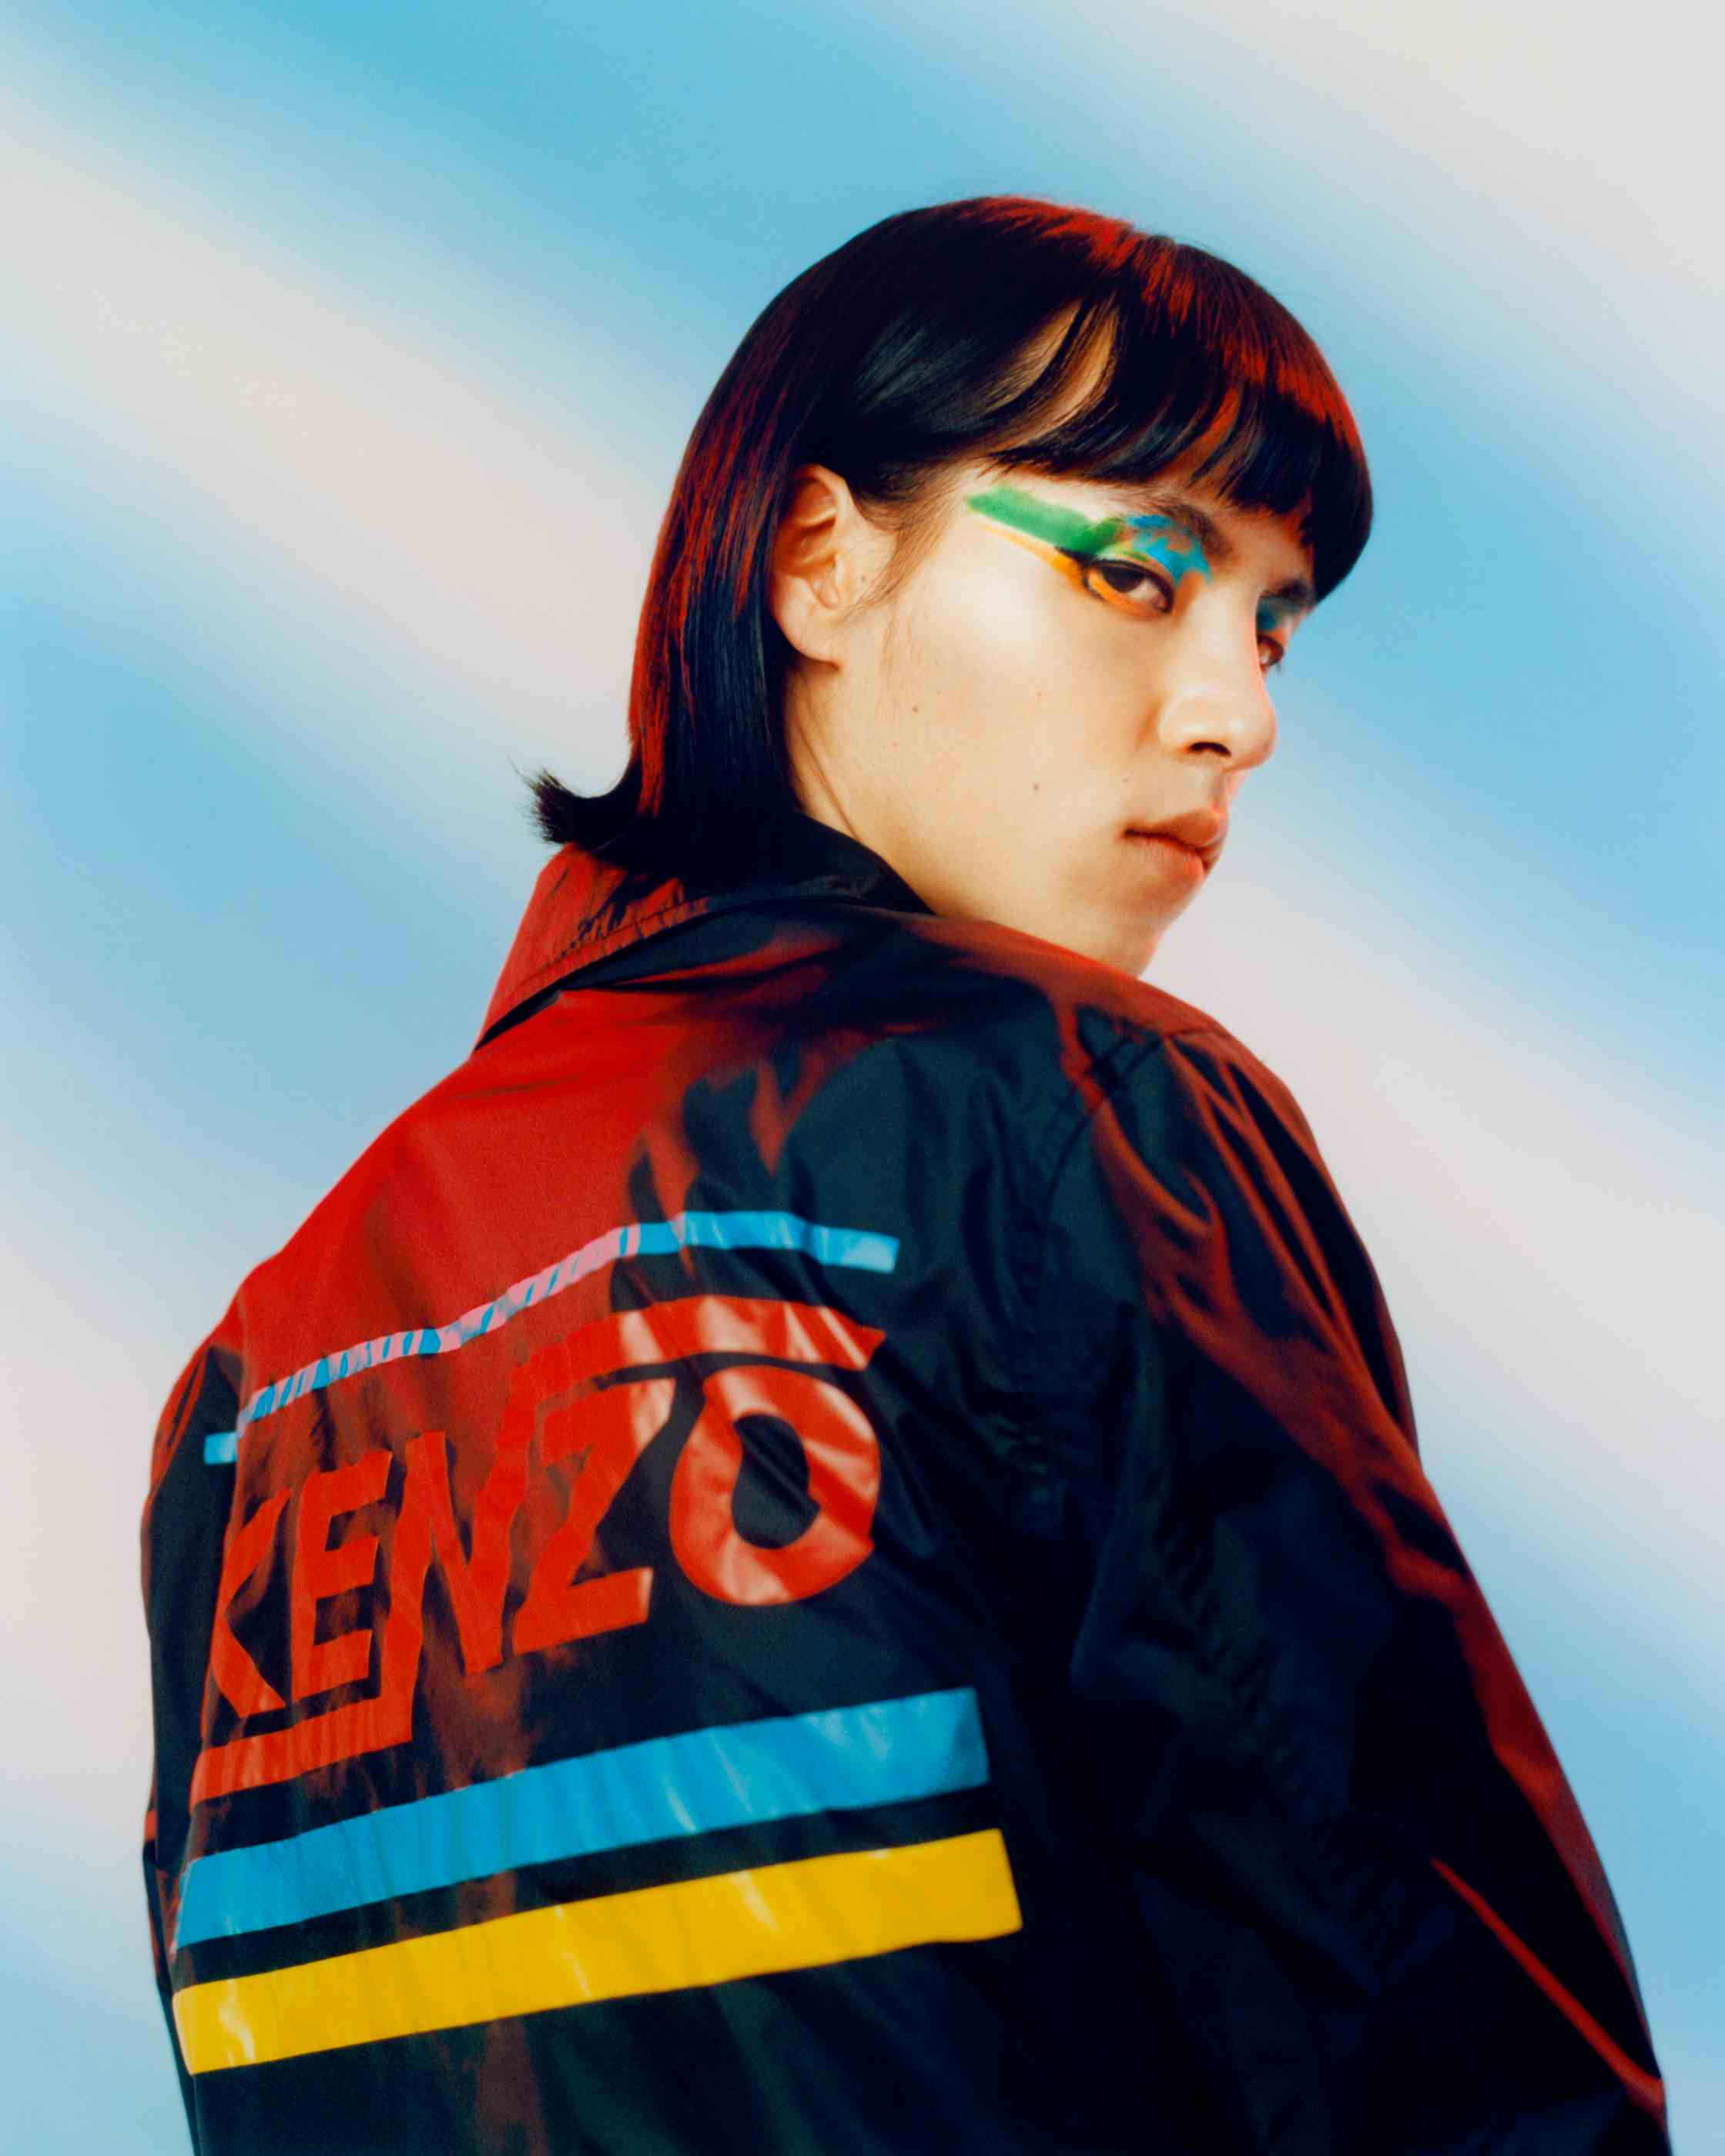 KENZO - Hyper Kenzo
Photographer: Scandebergs
Stylist: Elisa Zaccanti
Location: London